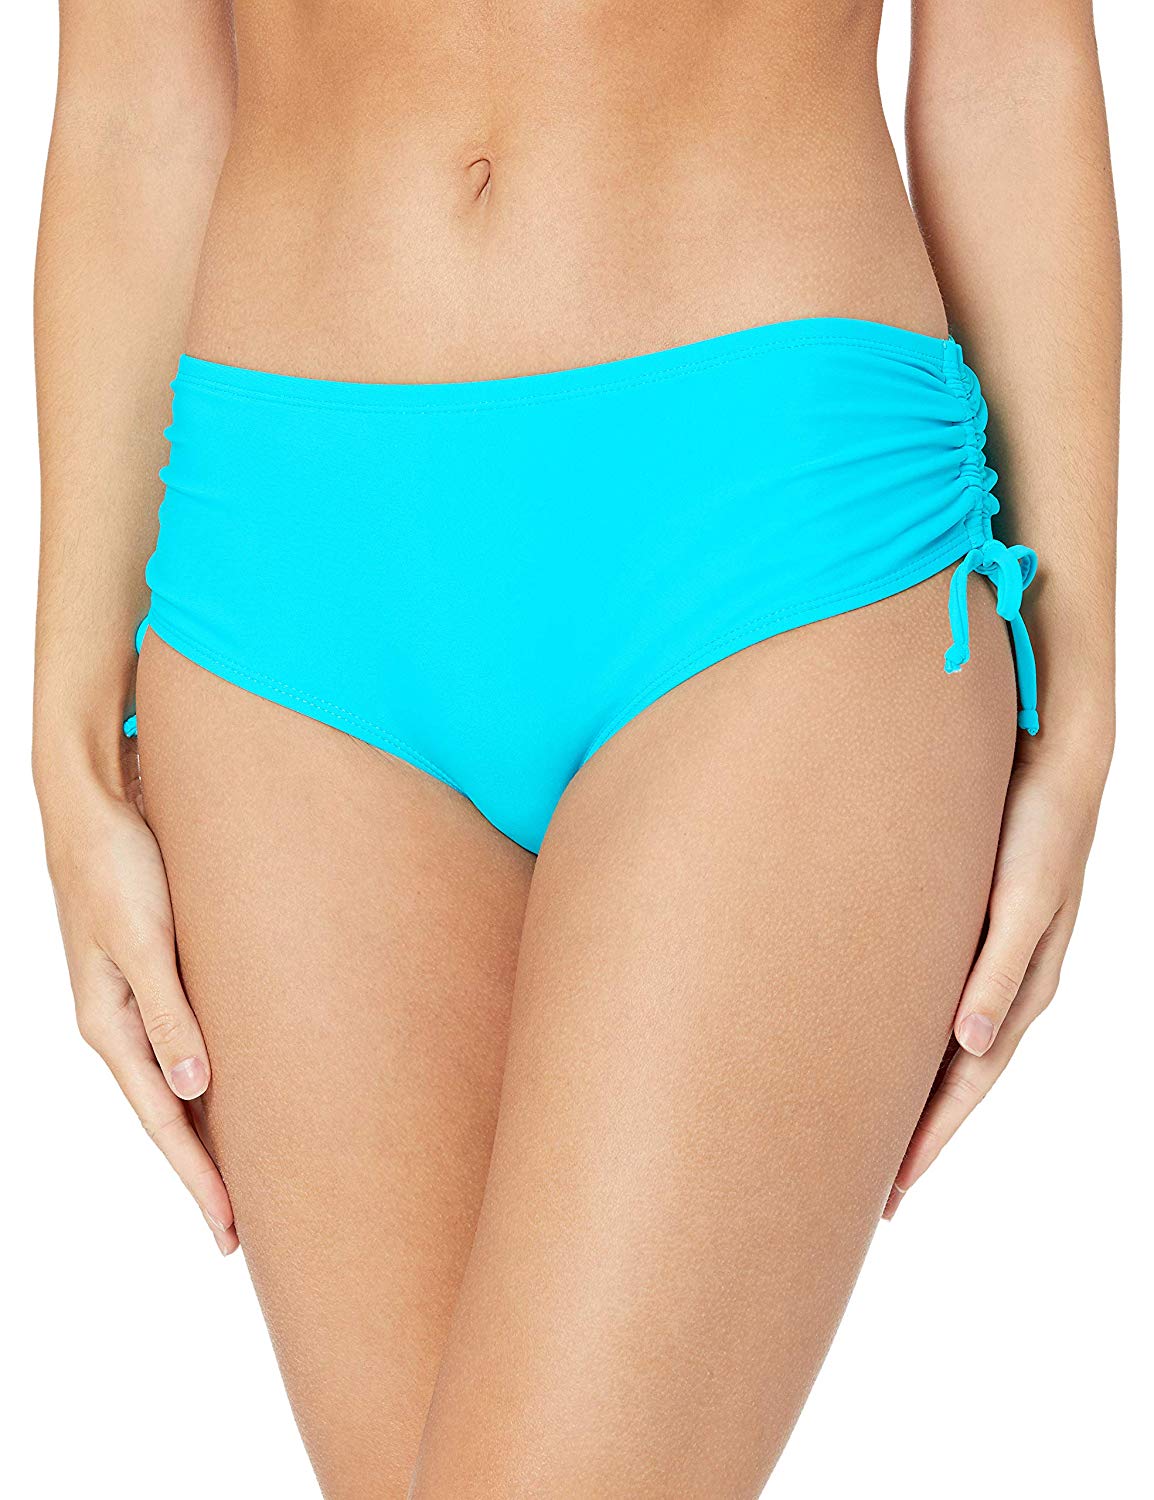 Catalina Women's Side Tie Bikini Swim Bottom Swimsuit,, Teal Green, Size Small - Picture 1 of 5